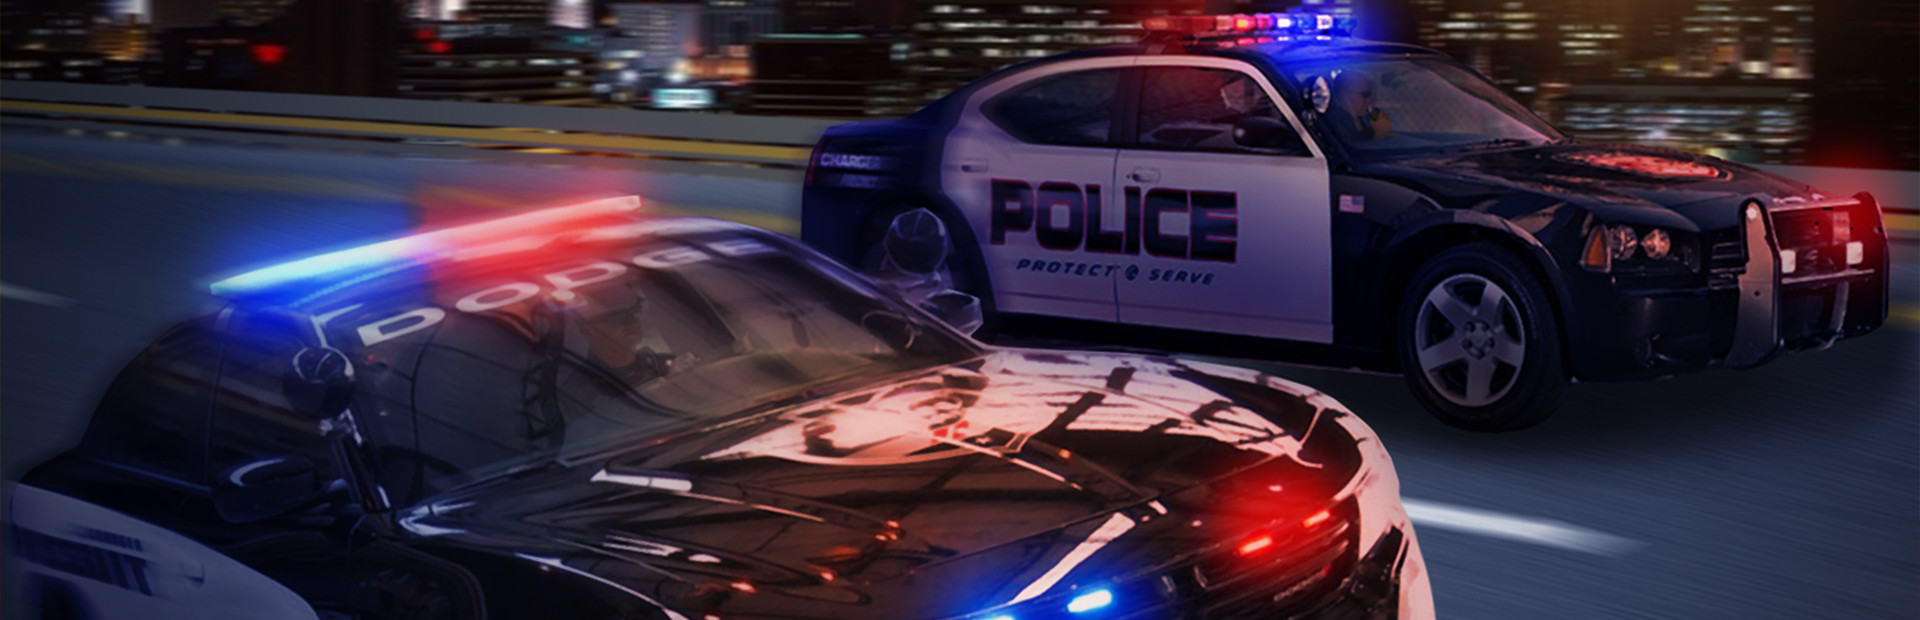 City Patrol: Police cover image